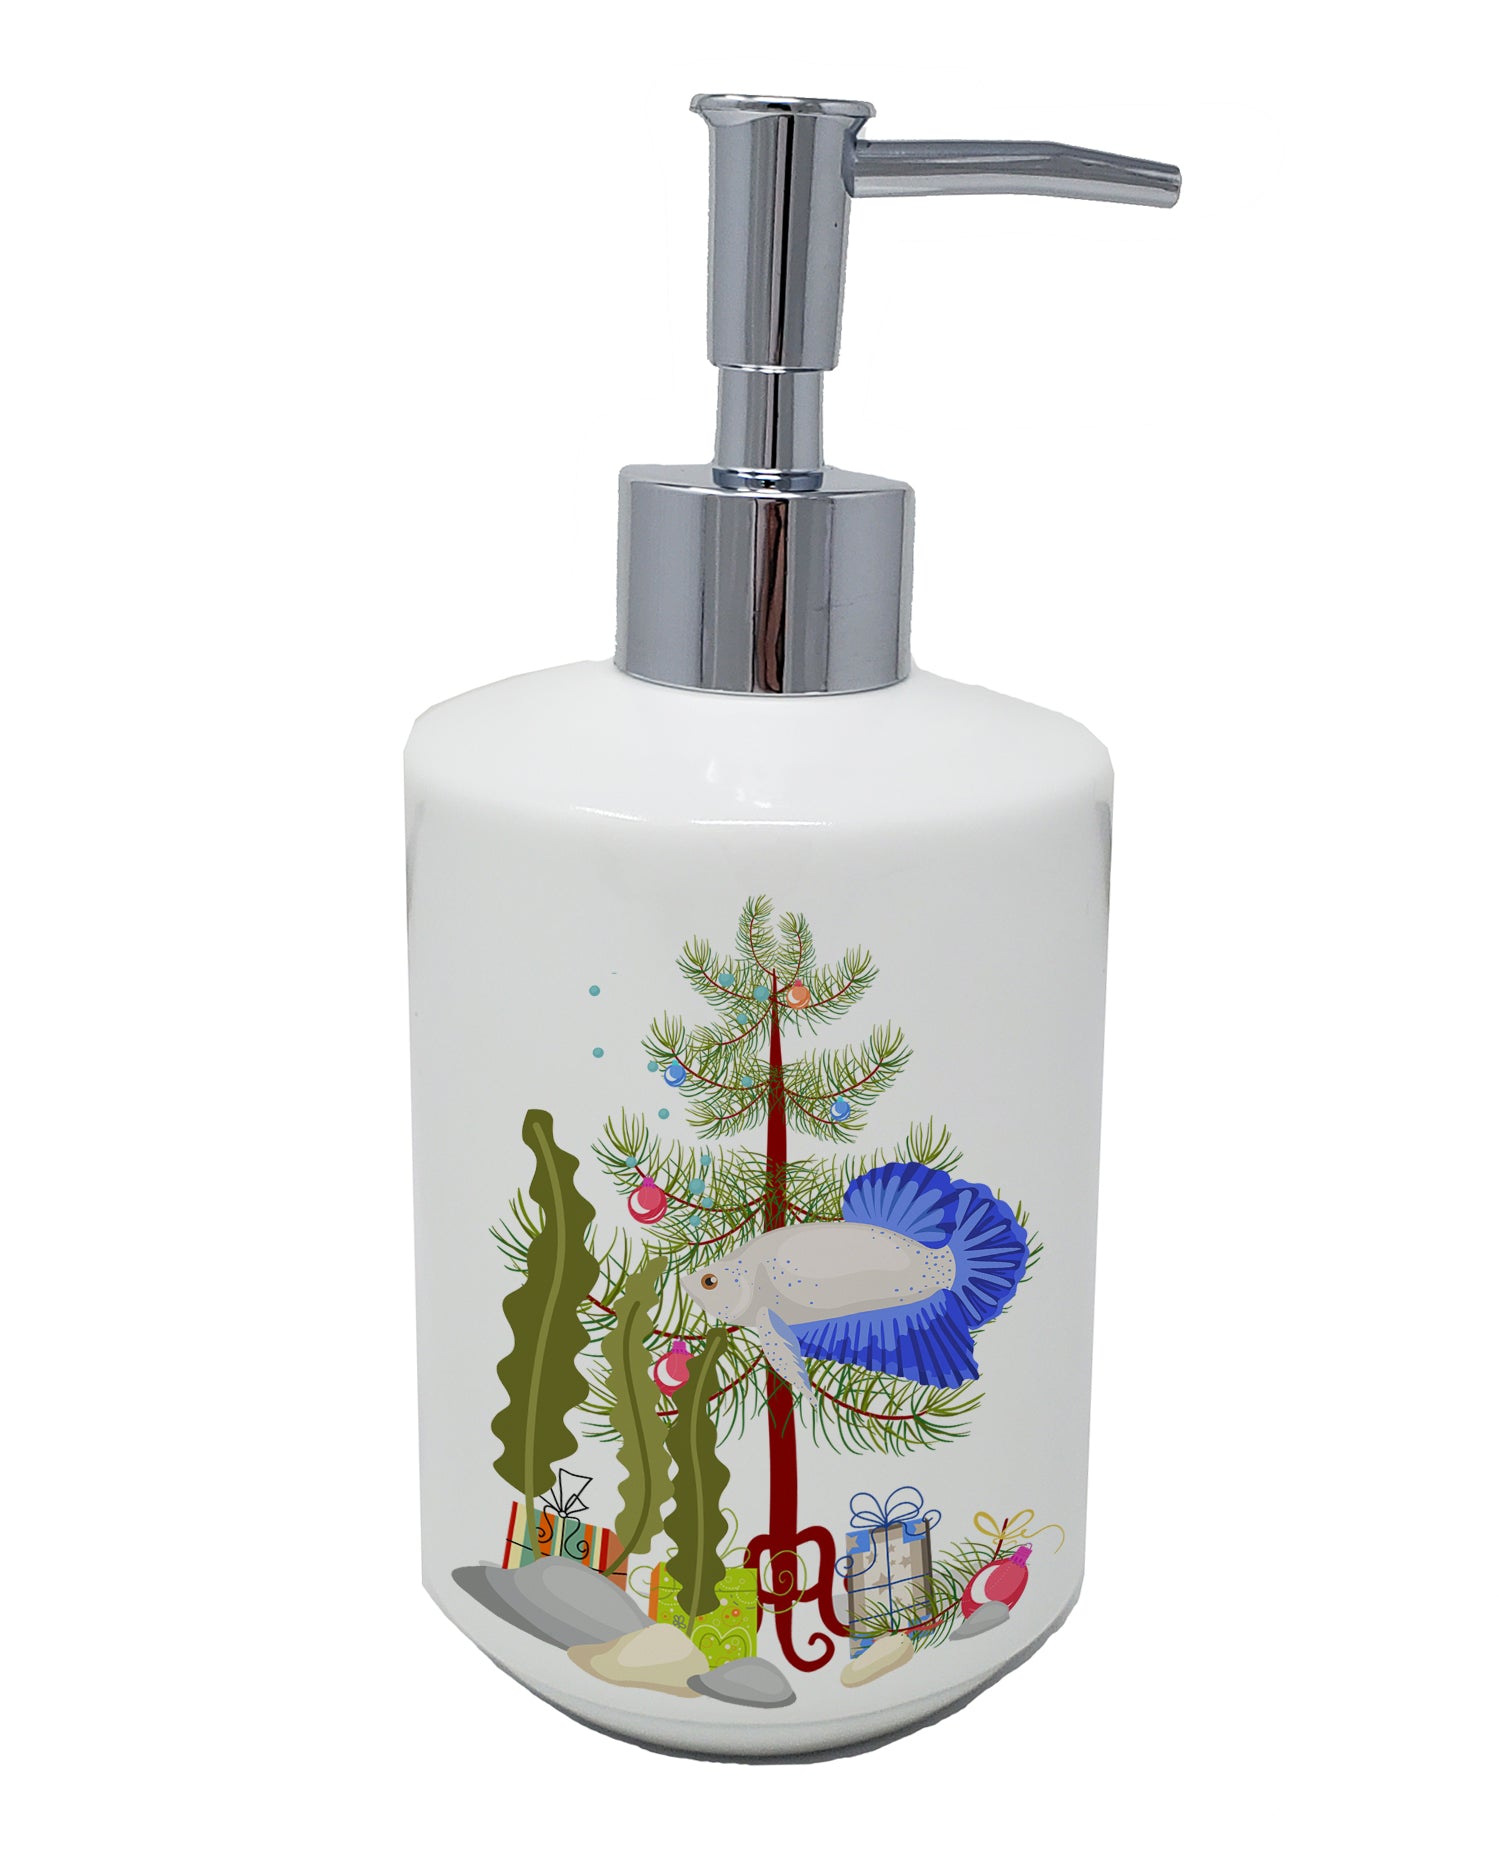 Buy this Plakat Betta Merry Christmas Ceramic Soap Dispenser